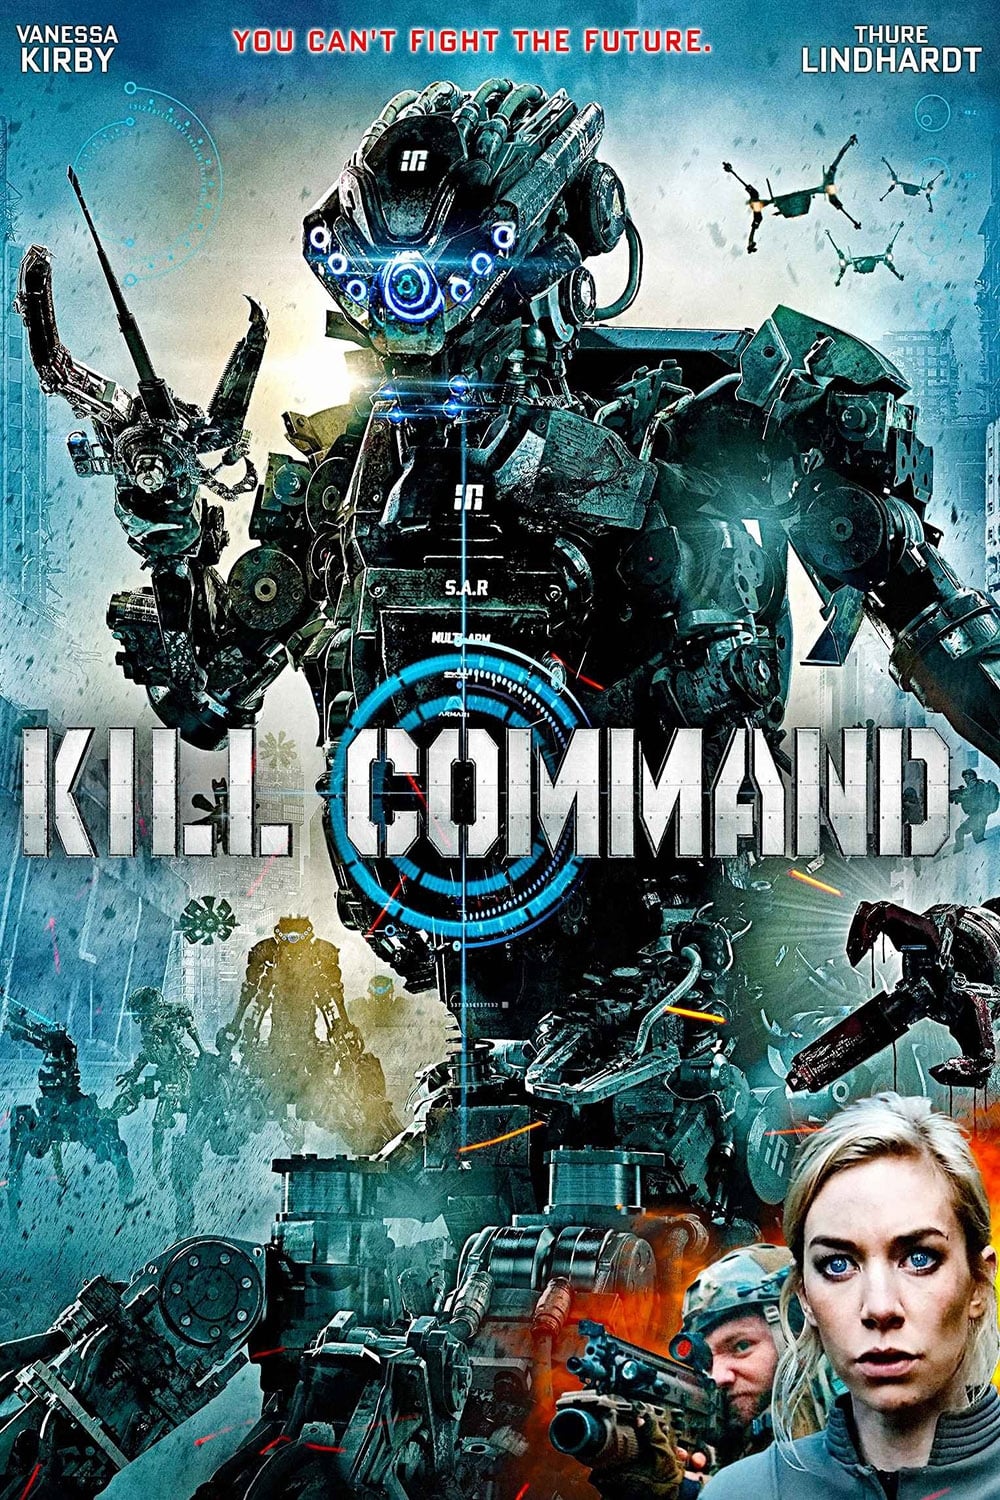 2016 Kill Command